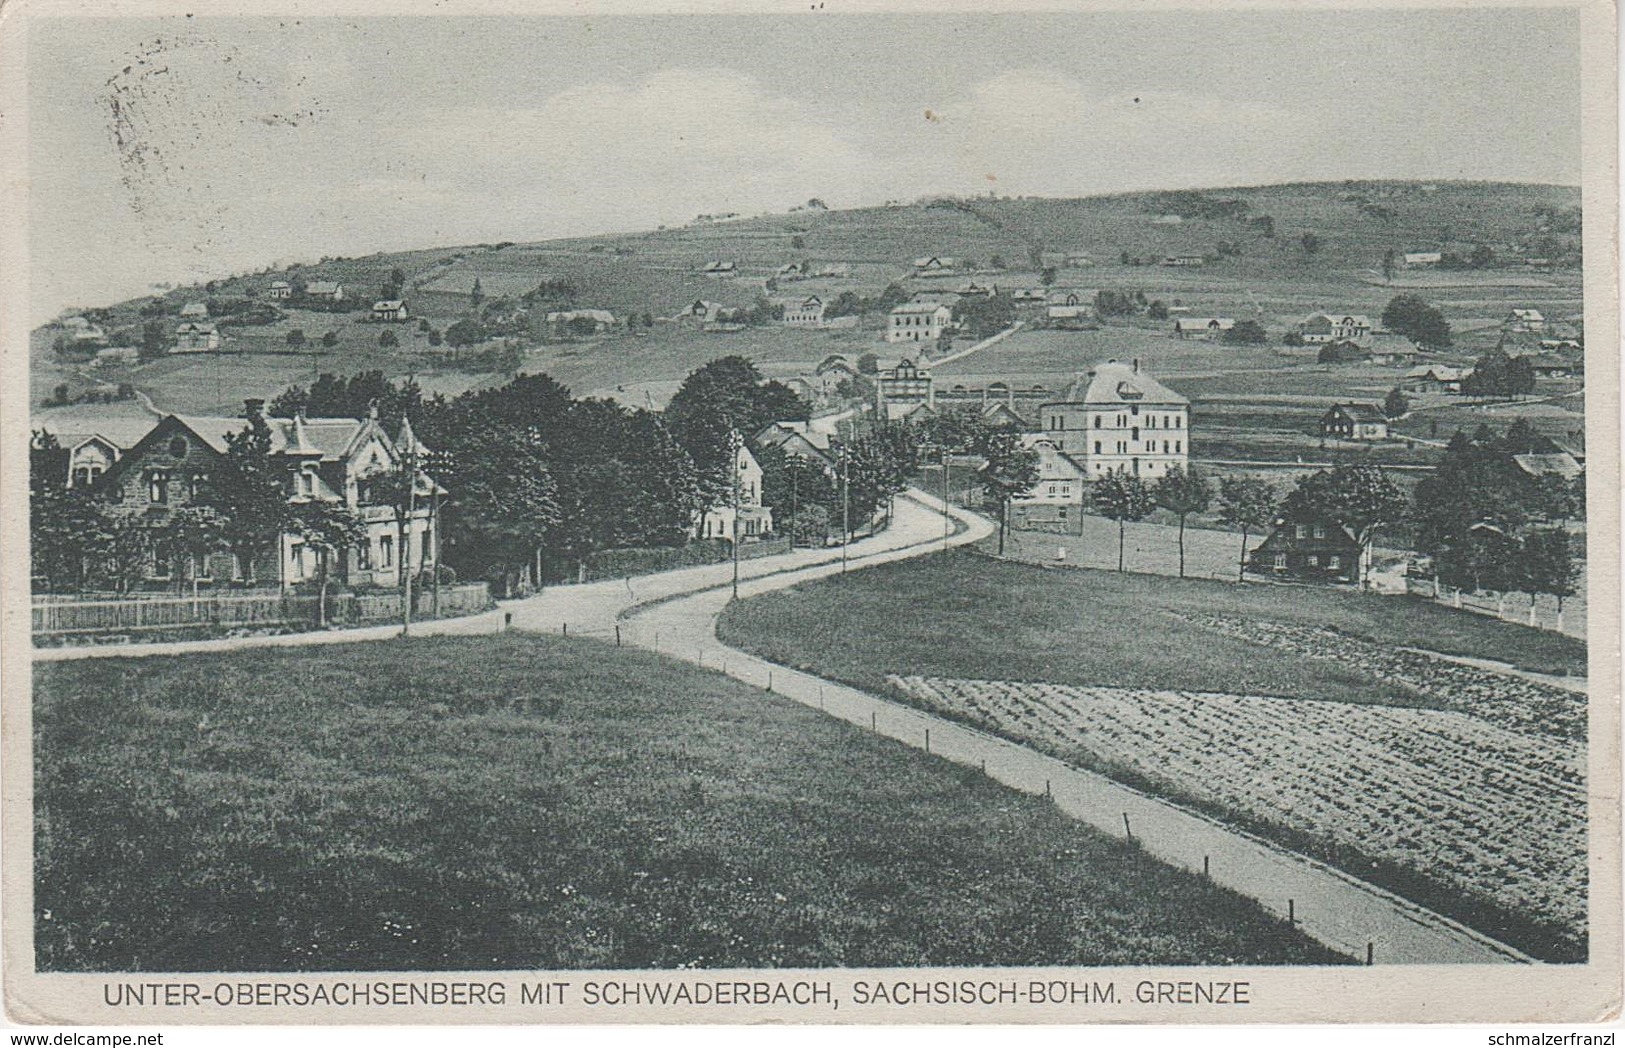 Schwaderbach 1928.jpg